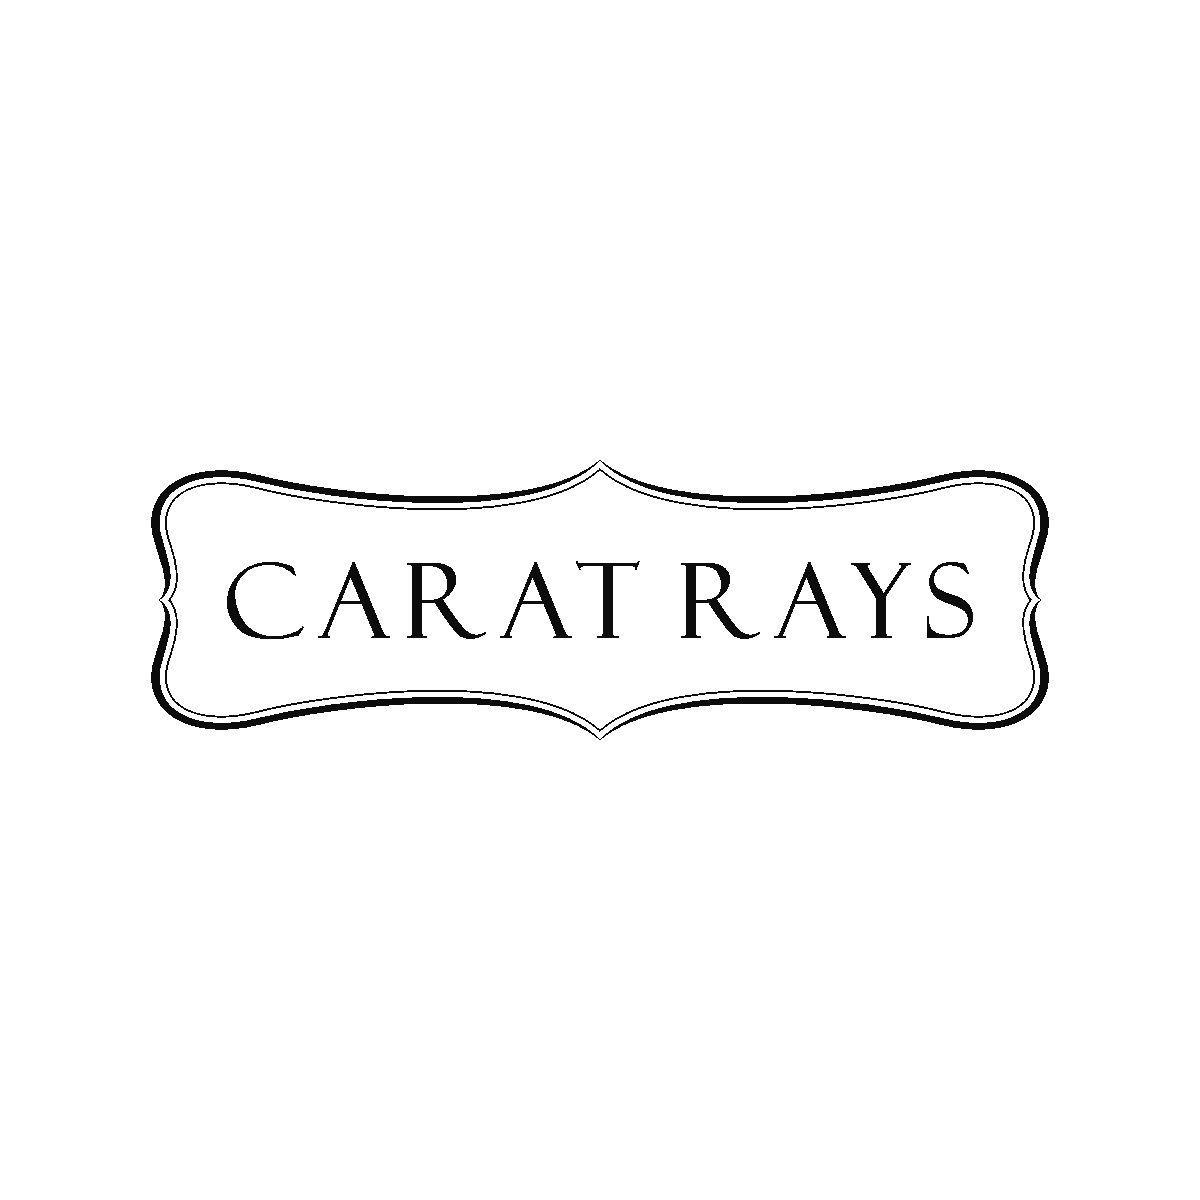 CARAT RAYS